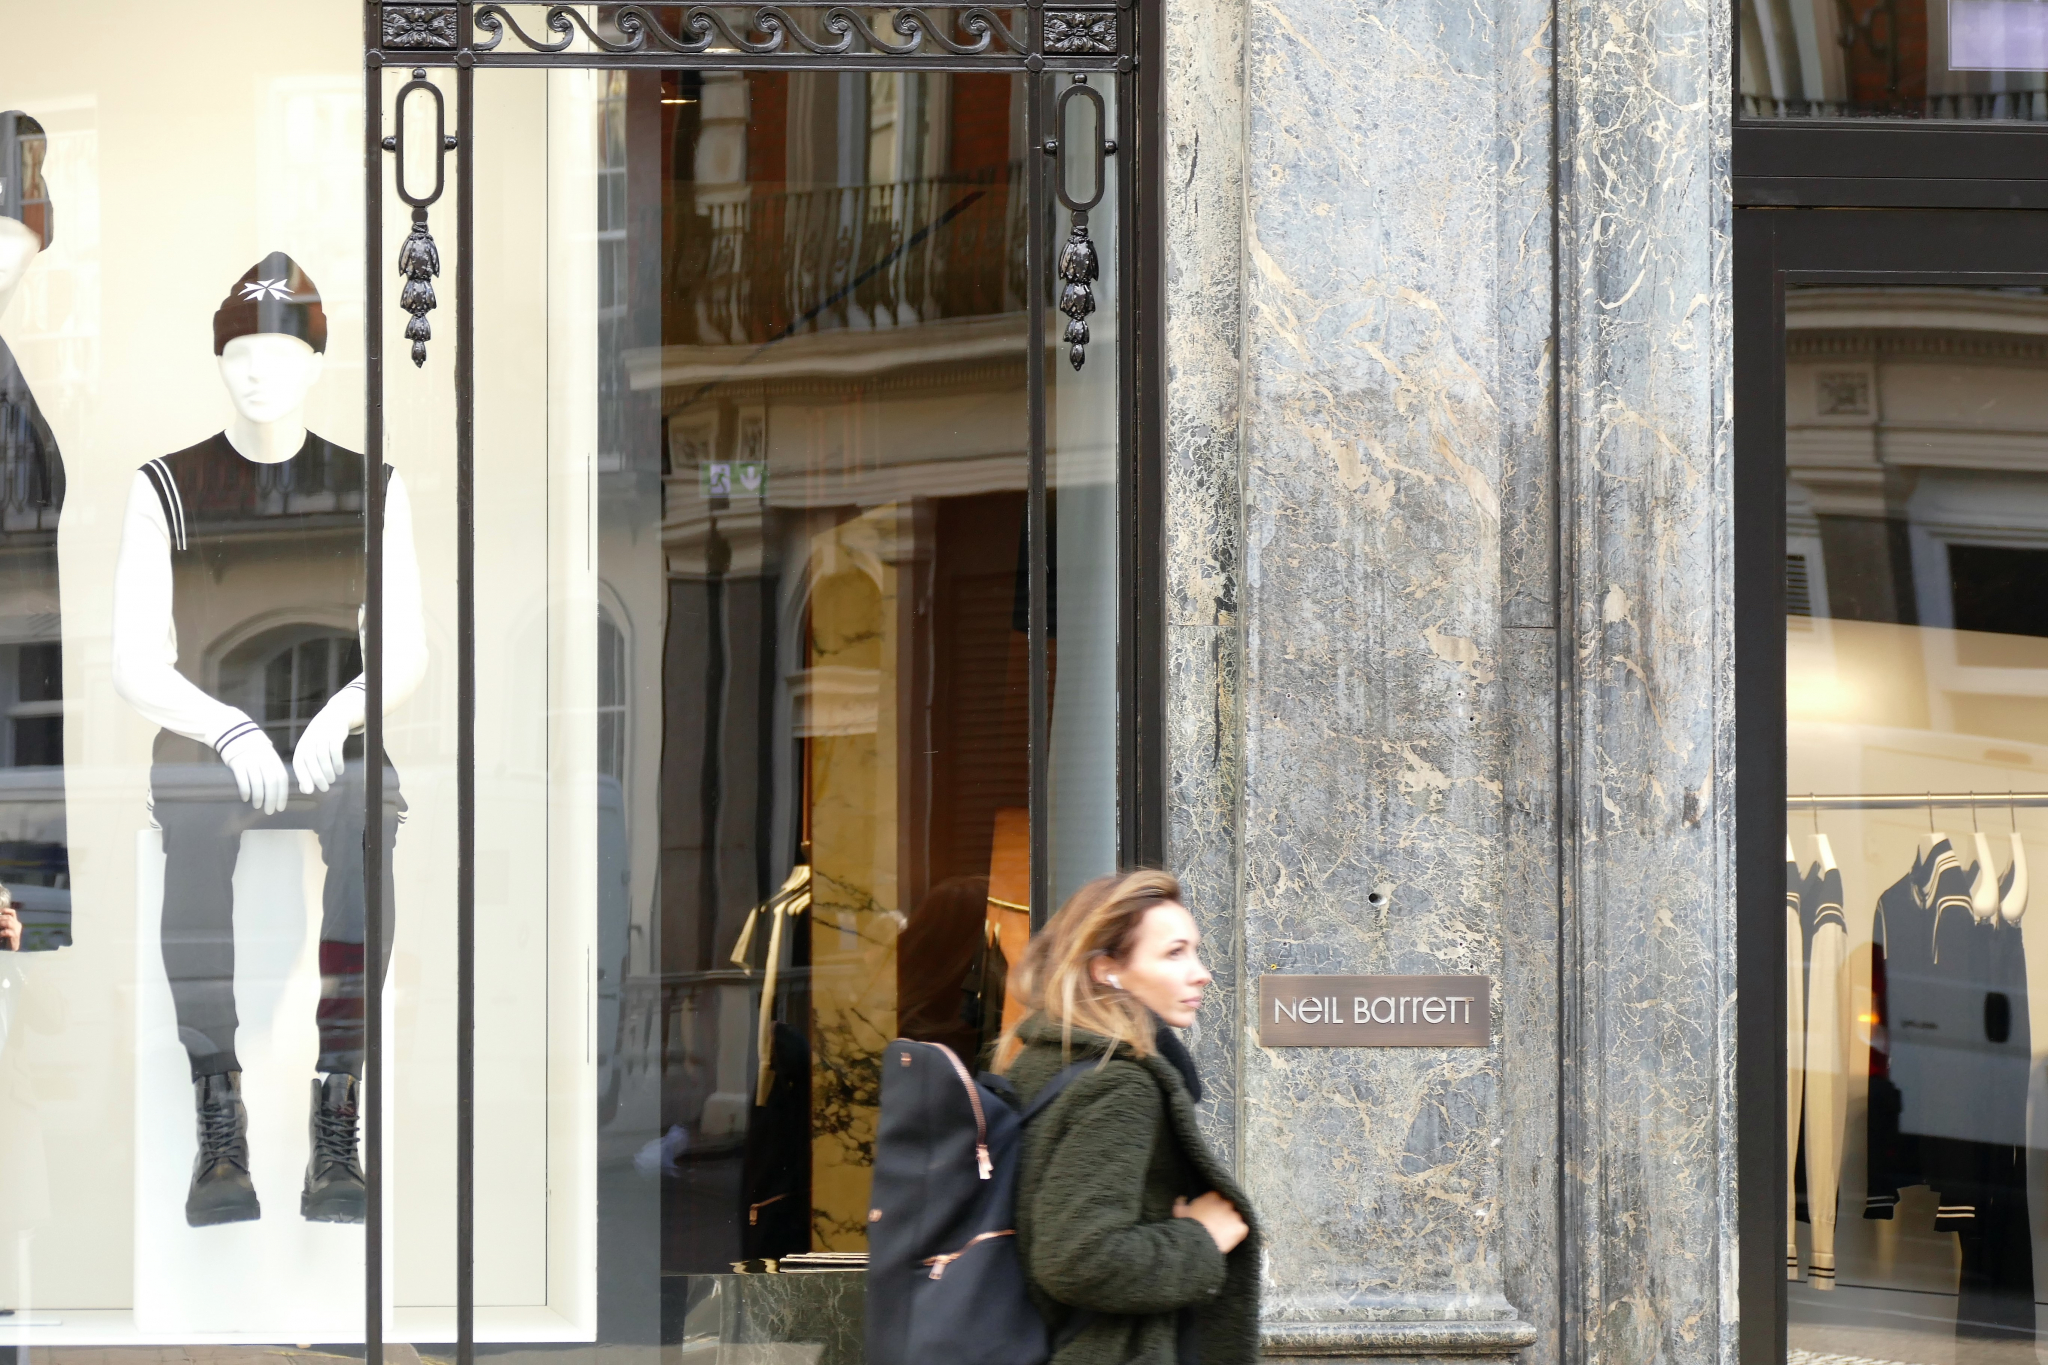 Report: Balenciaga to Open a Store on London's Bond Street